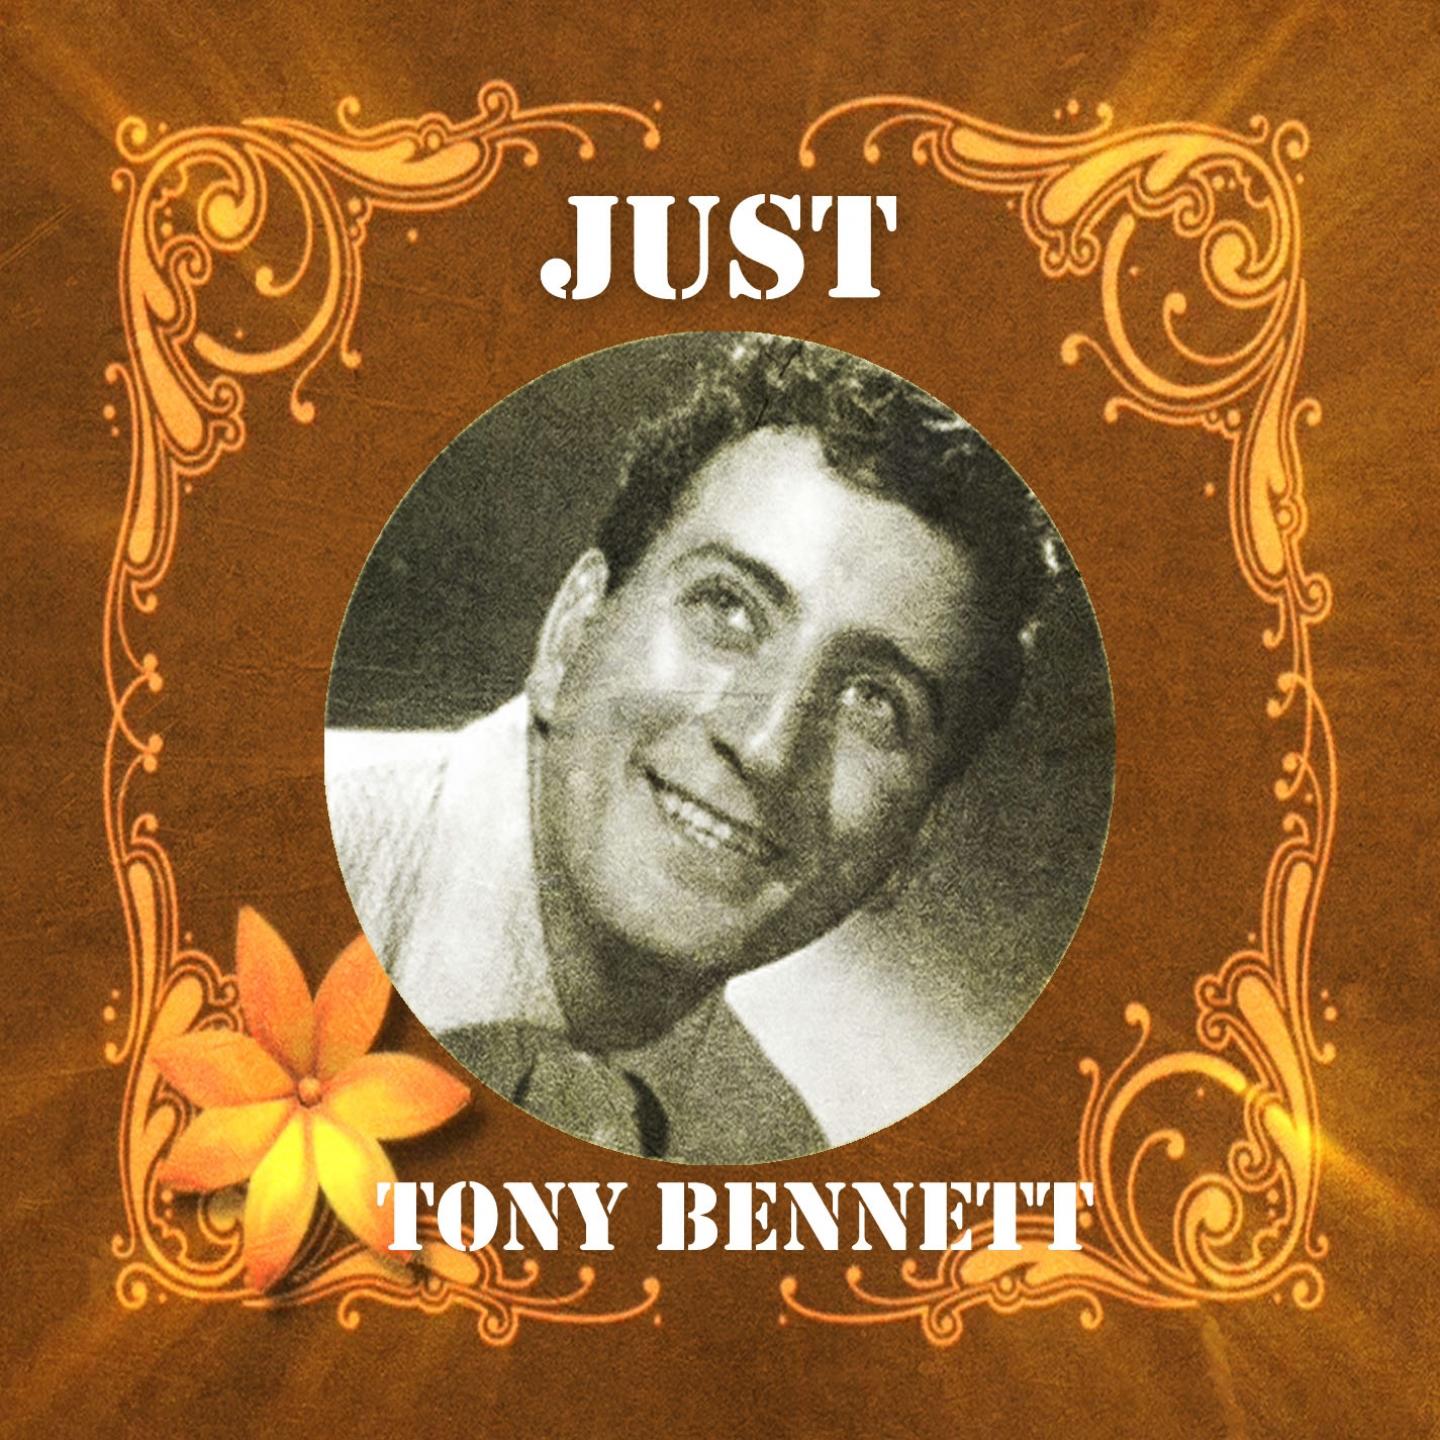 Just Tony Bennett